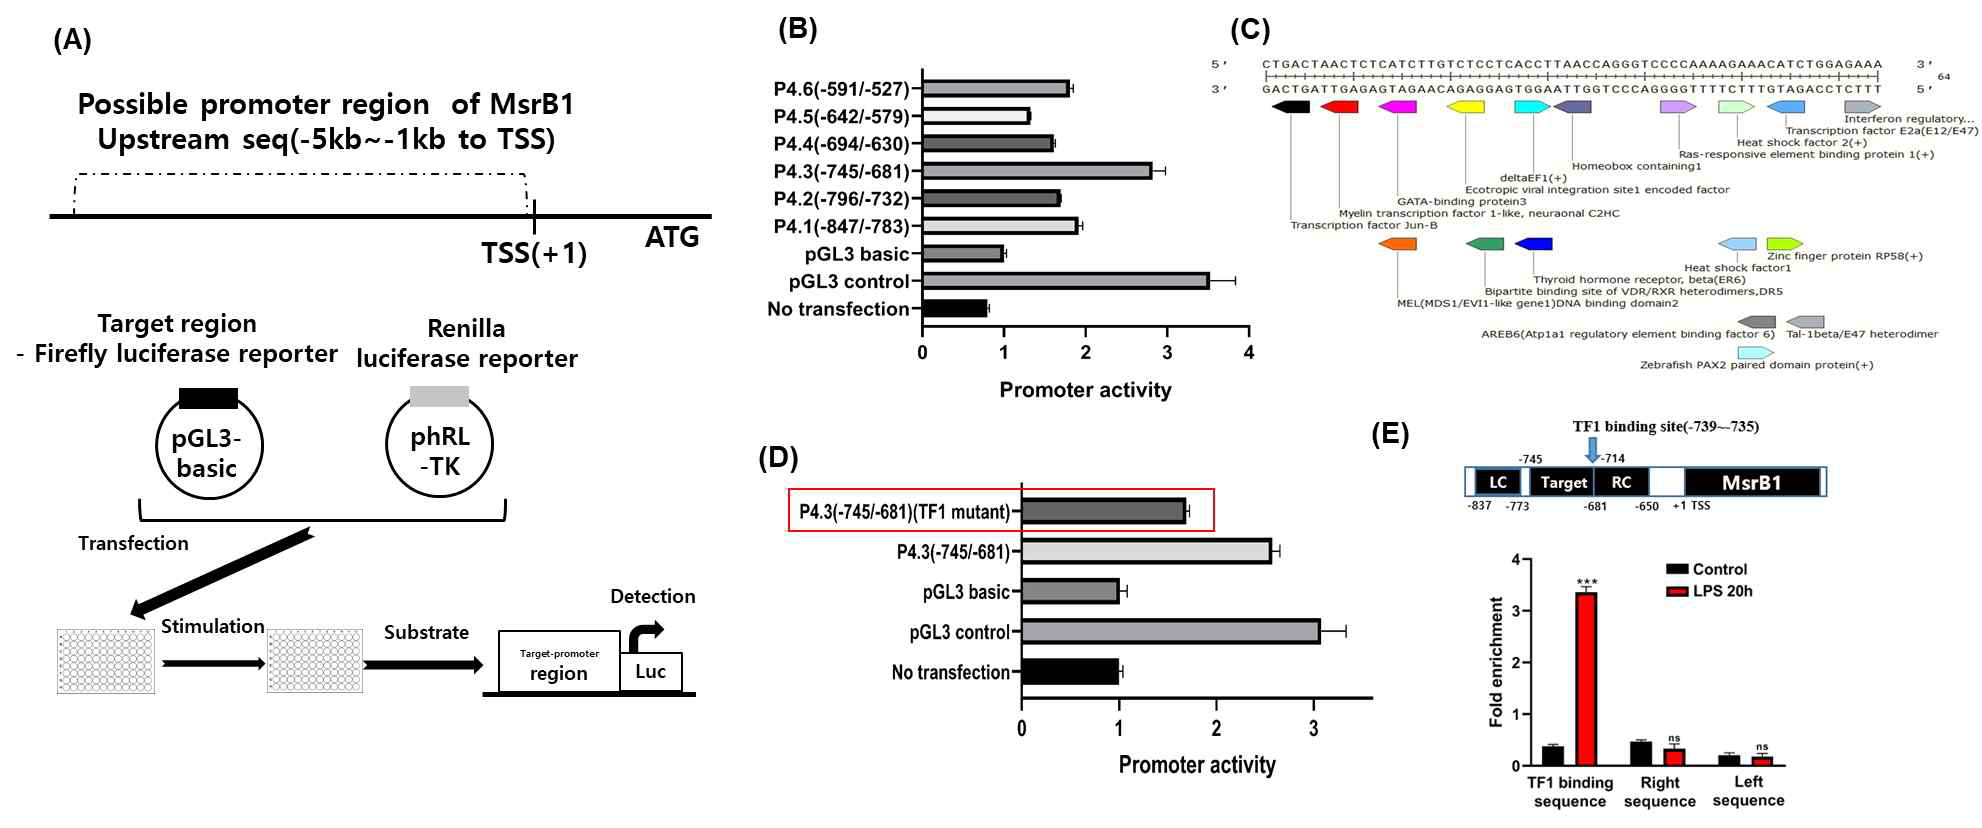 MsrB1 upstream promoter region에 대하여 luciferase reporter assay를 통하여 LPS에 의해 작동하는 전사인자 후보군을 탐색한 결과. (A) Promoter assay의 모식도. (B) Promoter assay 결과. (C) Binding protein 분석 결과. (D) Transcription factor를 대상으로 한 mutant promoter assay 결과. (E) ChIp-qPCR을 통해 TF1에 결합된 MsrB1의 promoter region을 확인한 결과